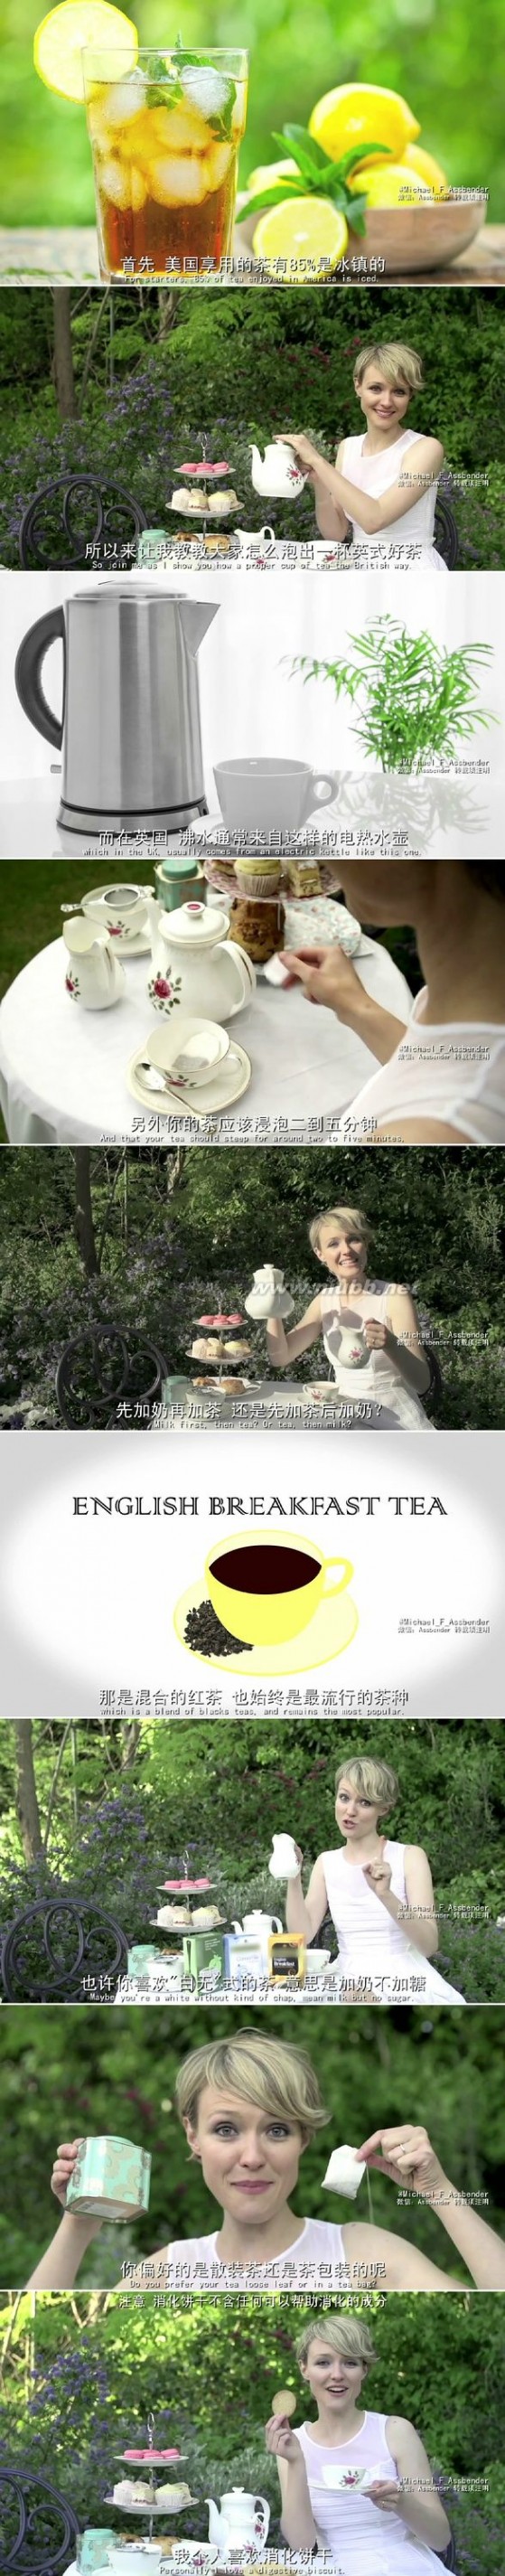 theqqtea 【我的翻译】【中英双语字幕】How to Make Tea the British Way - Anglophenia Ep 31※【图安一记】【微信公众号：Assbender】缺英：如何泡出完美英式好茶